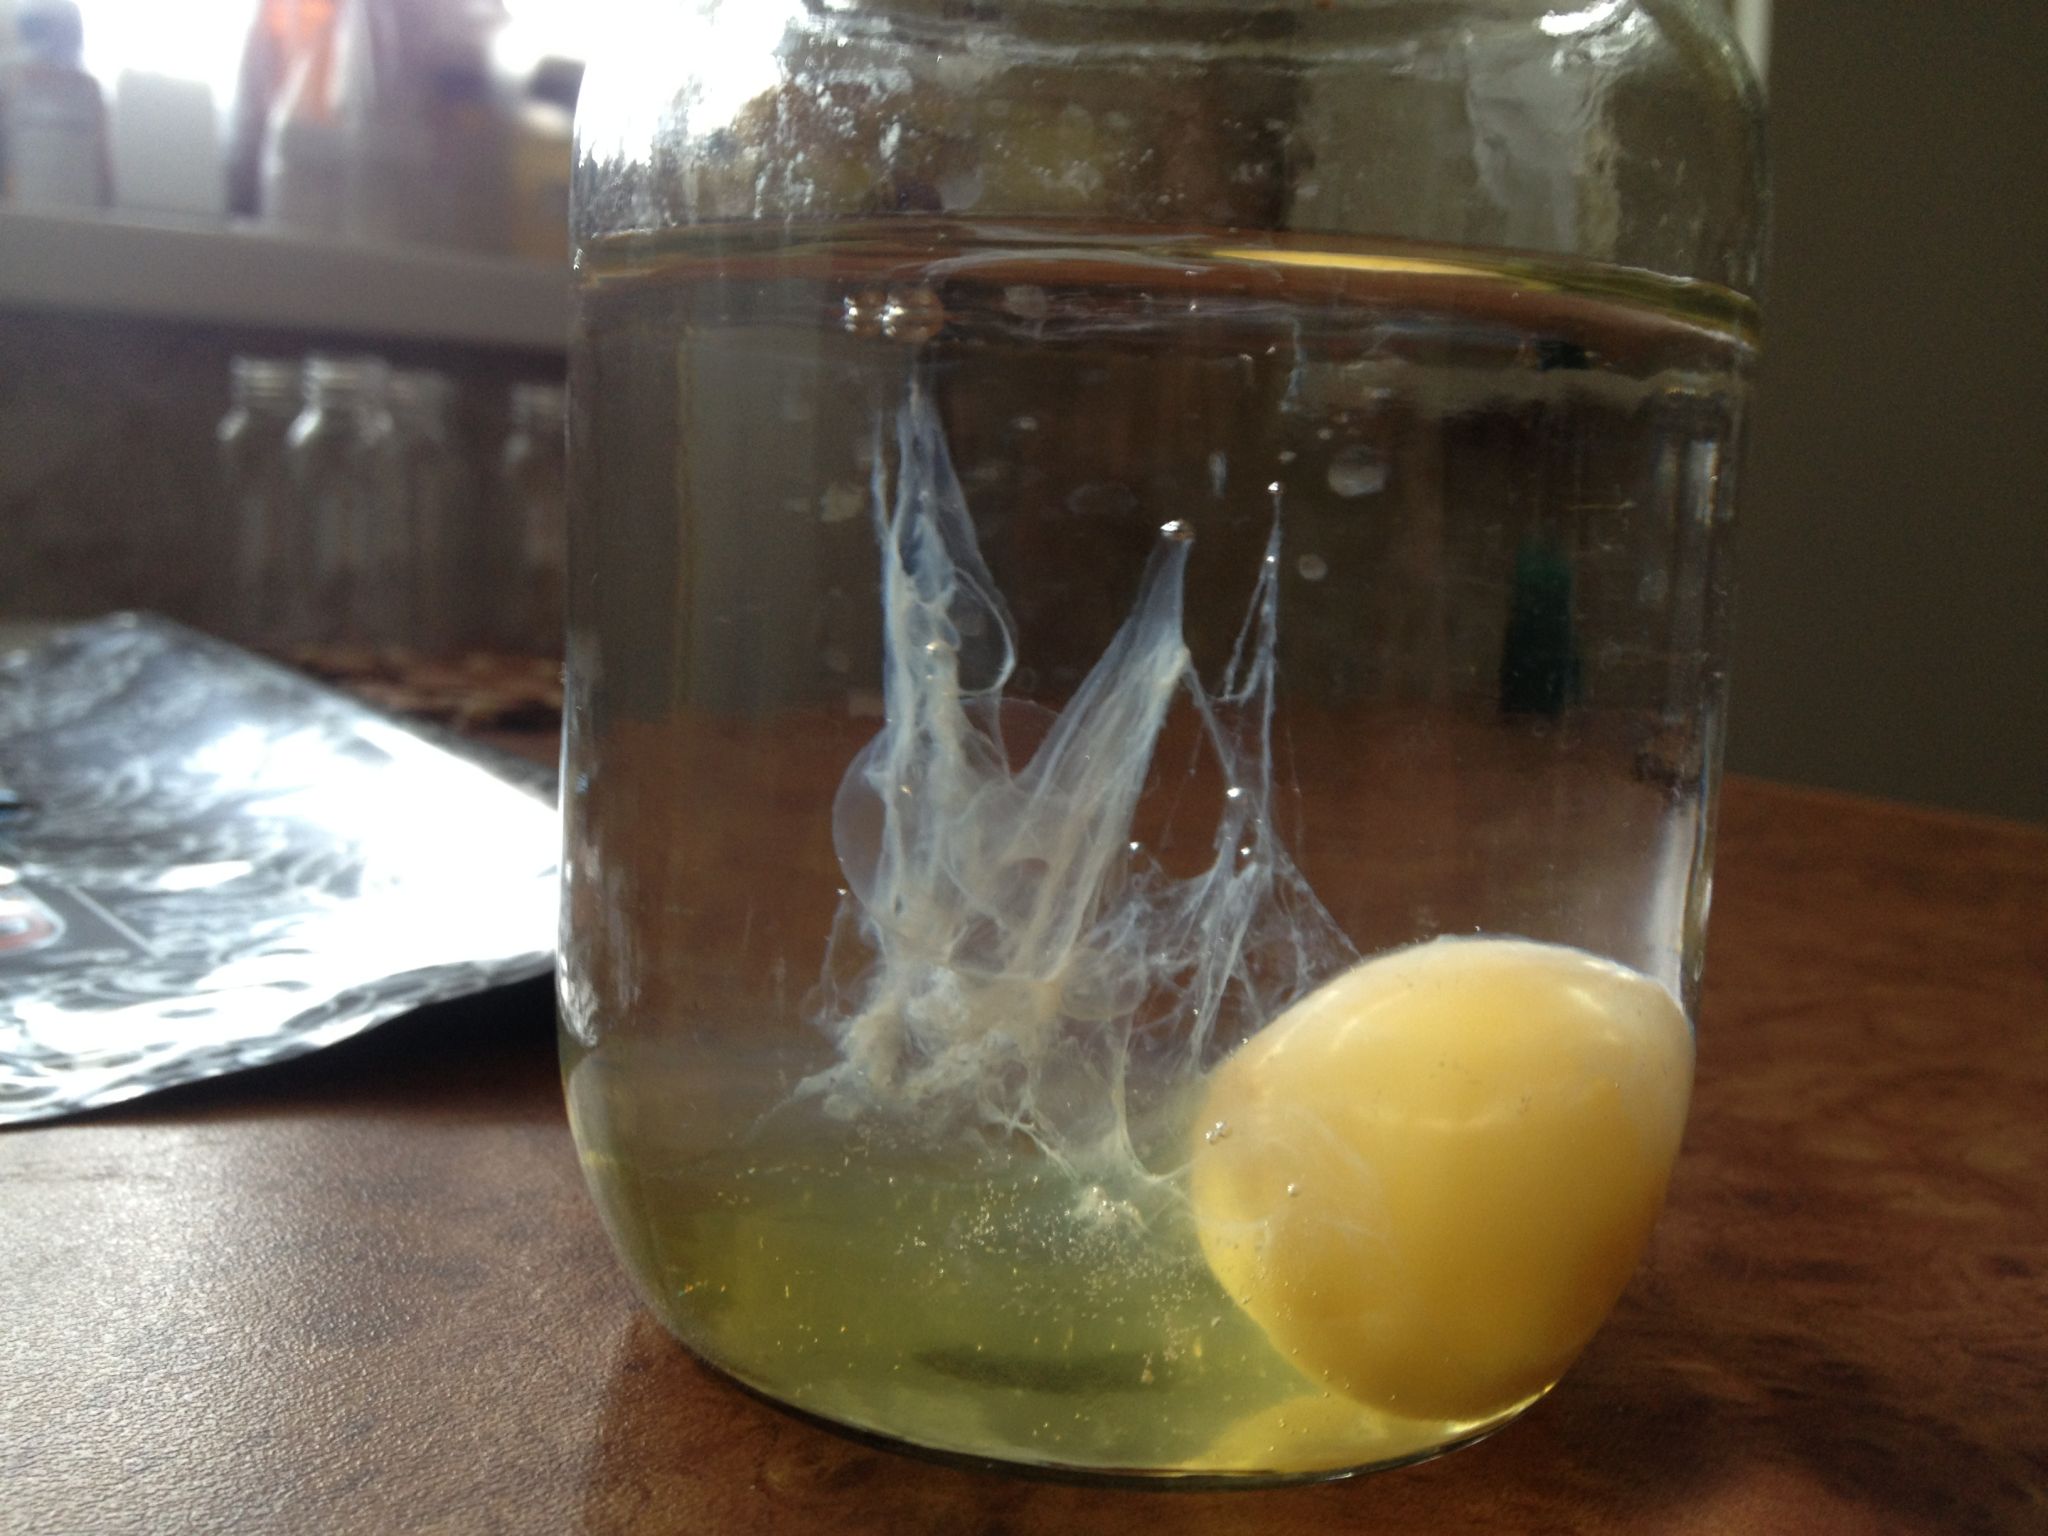 яйцо в стакане с водой фото